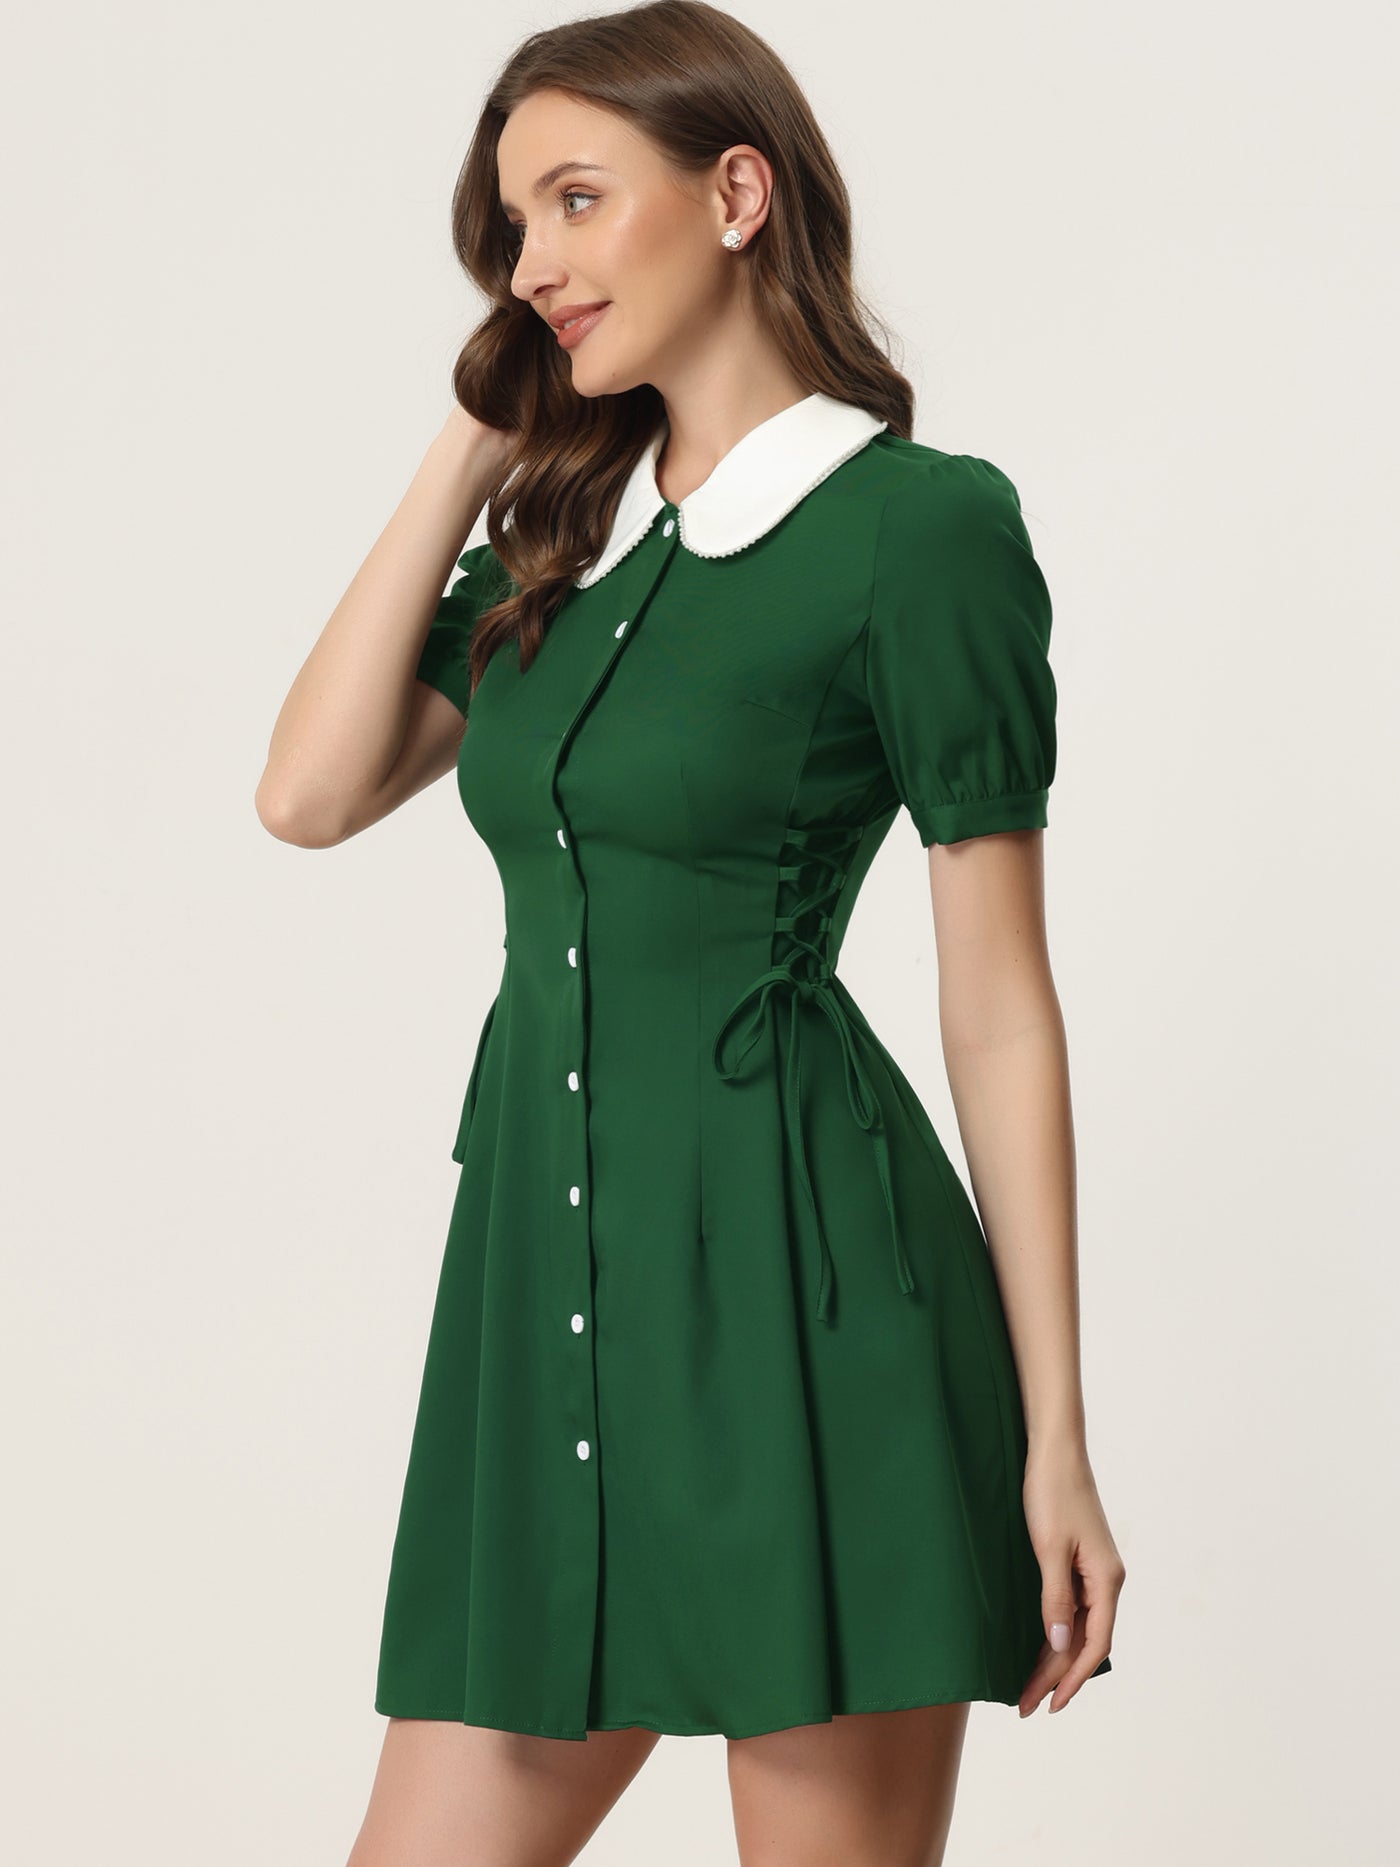 Allegra K Vintage Peter Pan Collar Lace Up Button Down Dress